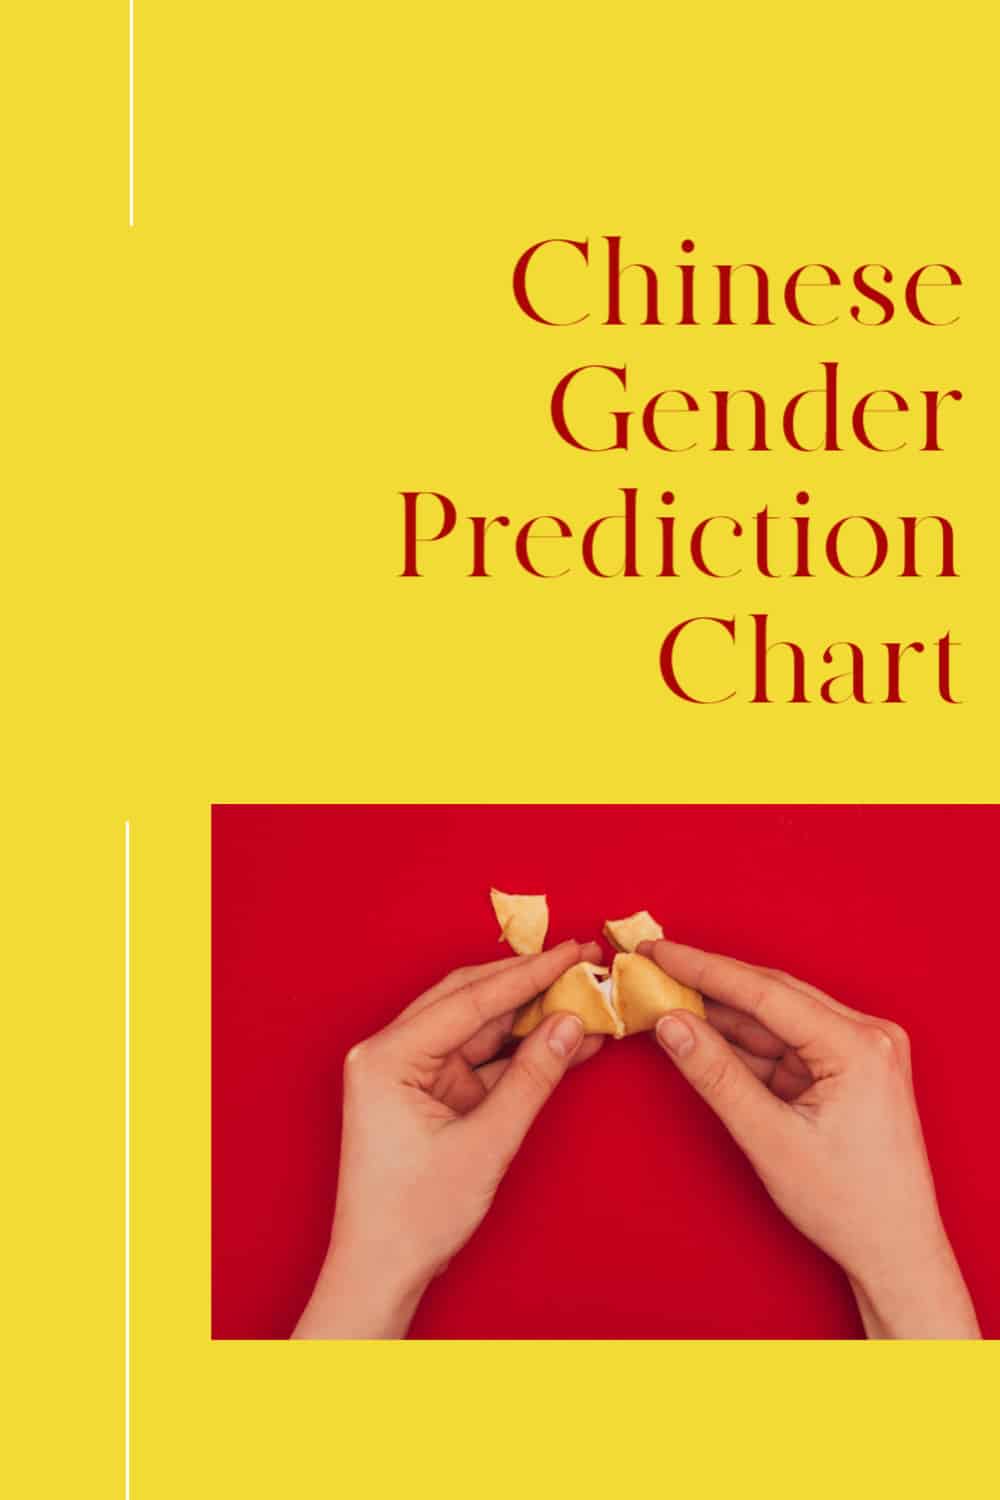 Chinese Gender Predictior